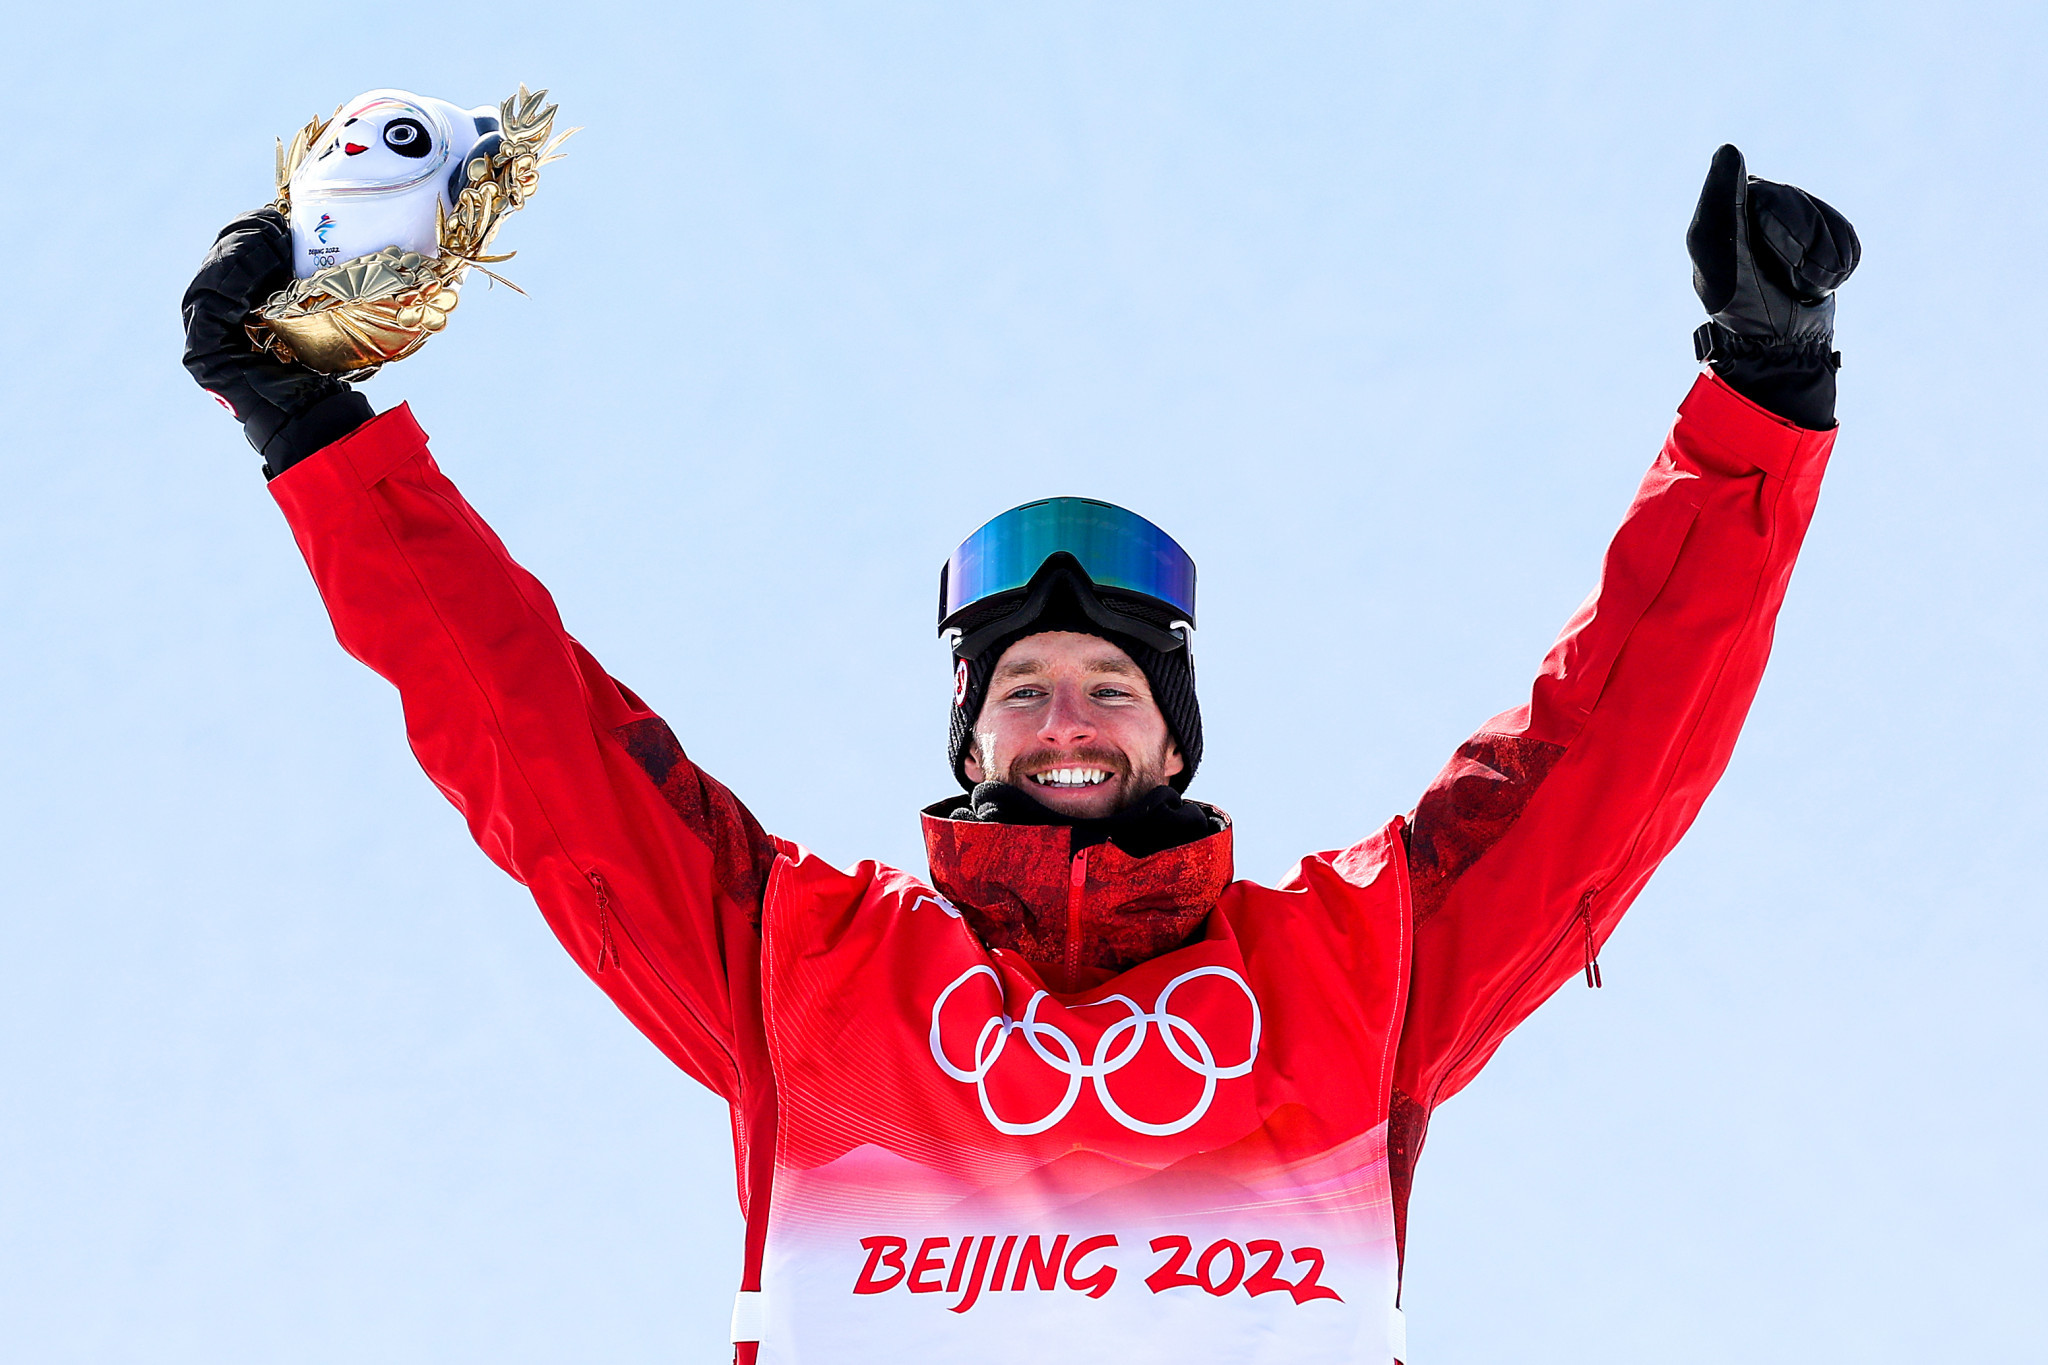 Cancer survivor Parrot triumphs in men's snowboard slopestyle at Beijing 2022